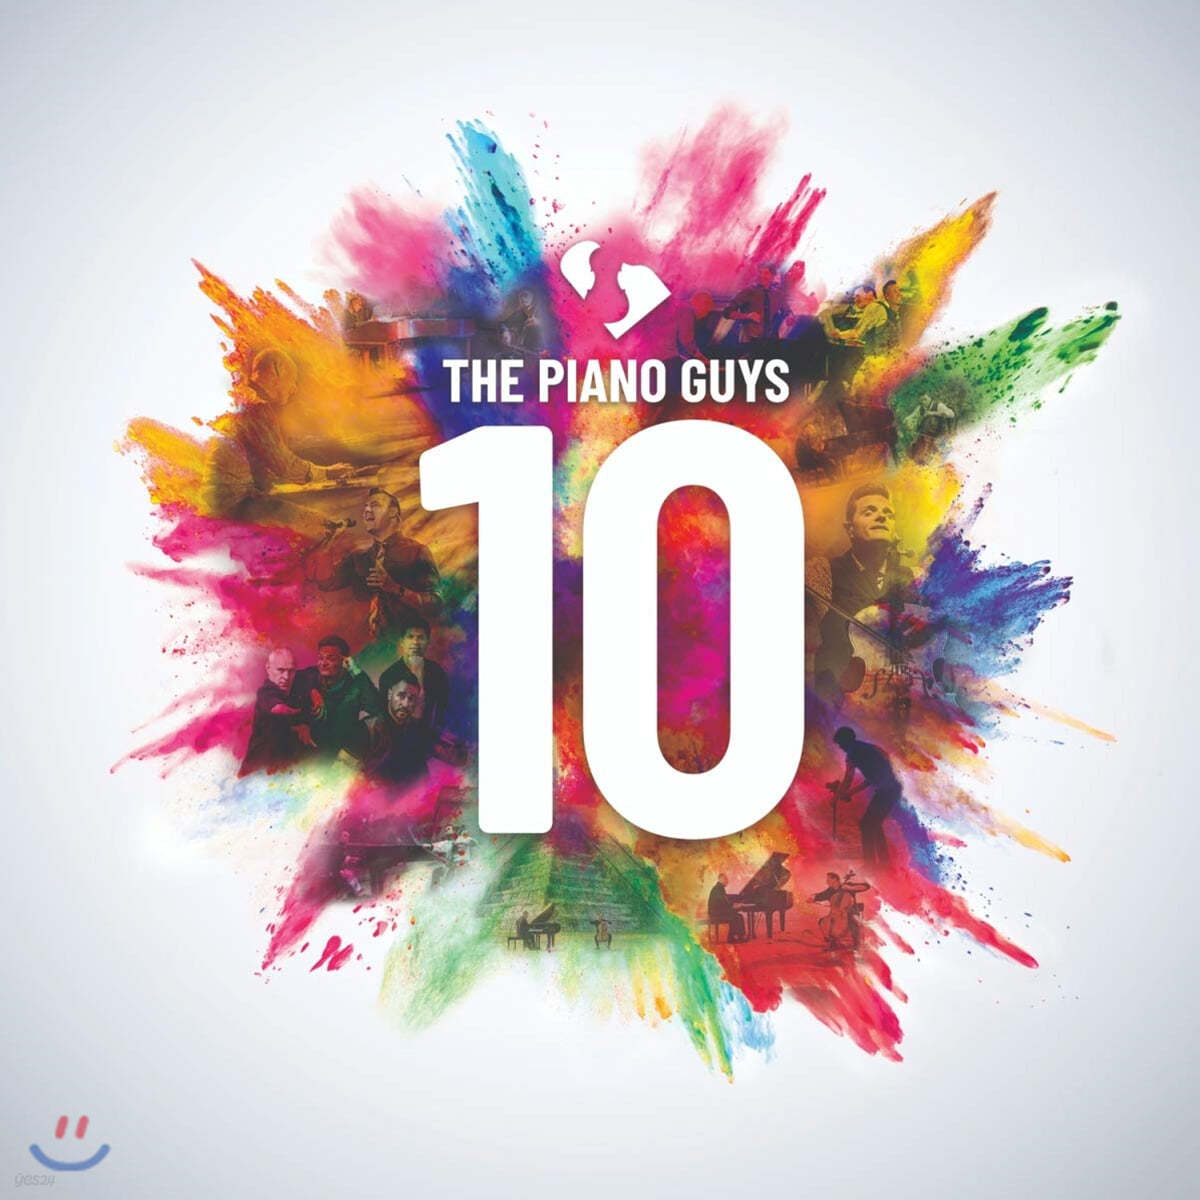 The Piano Guys (피아노 가이스) - 10 [2CD+DVD]